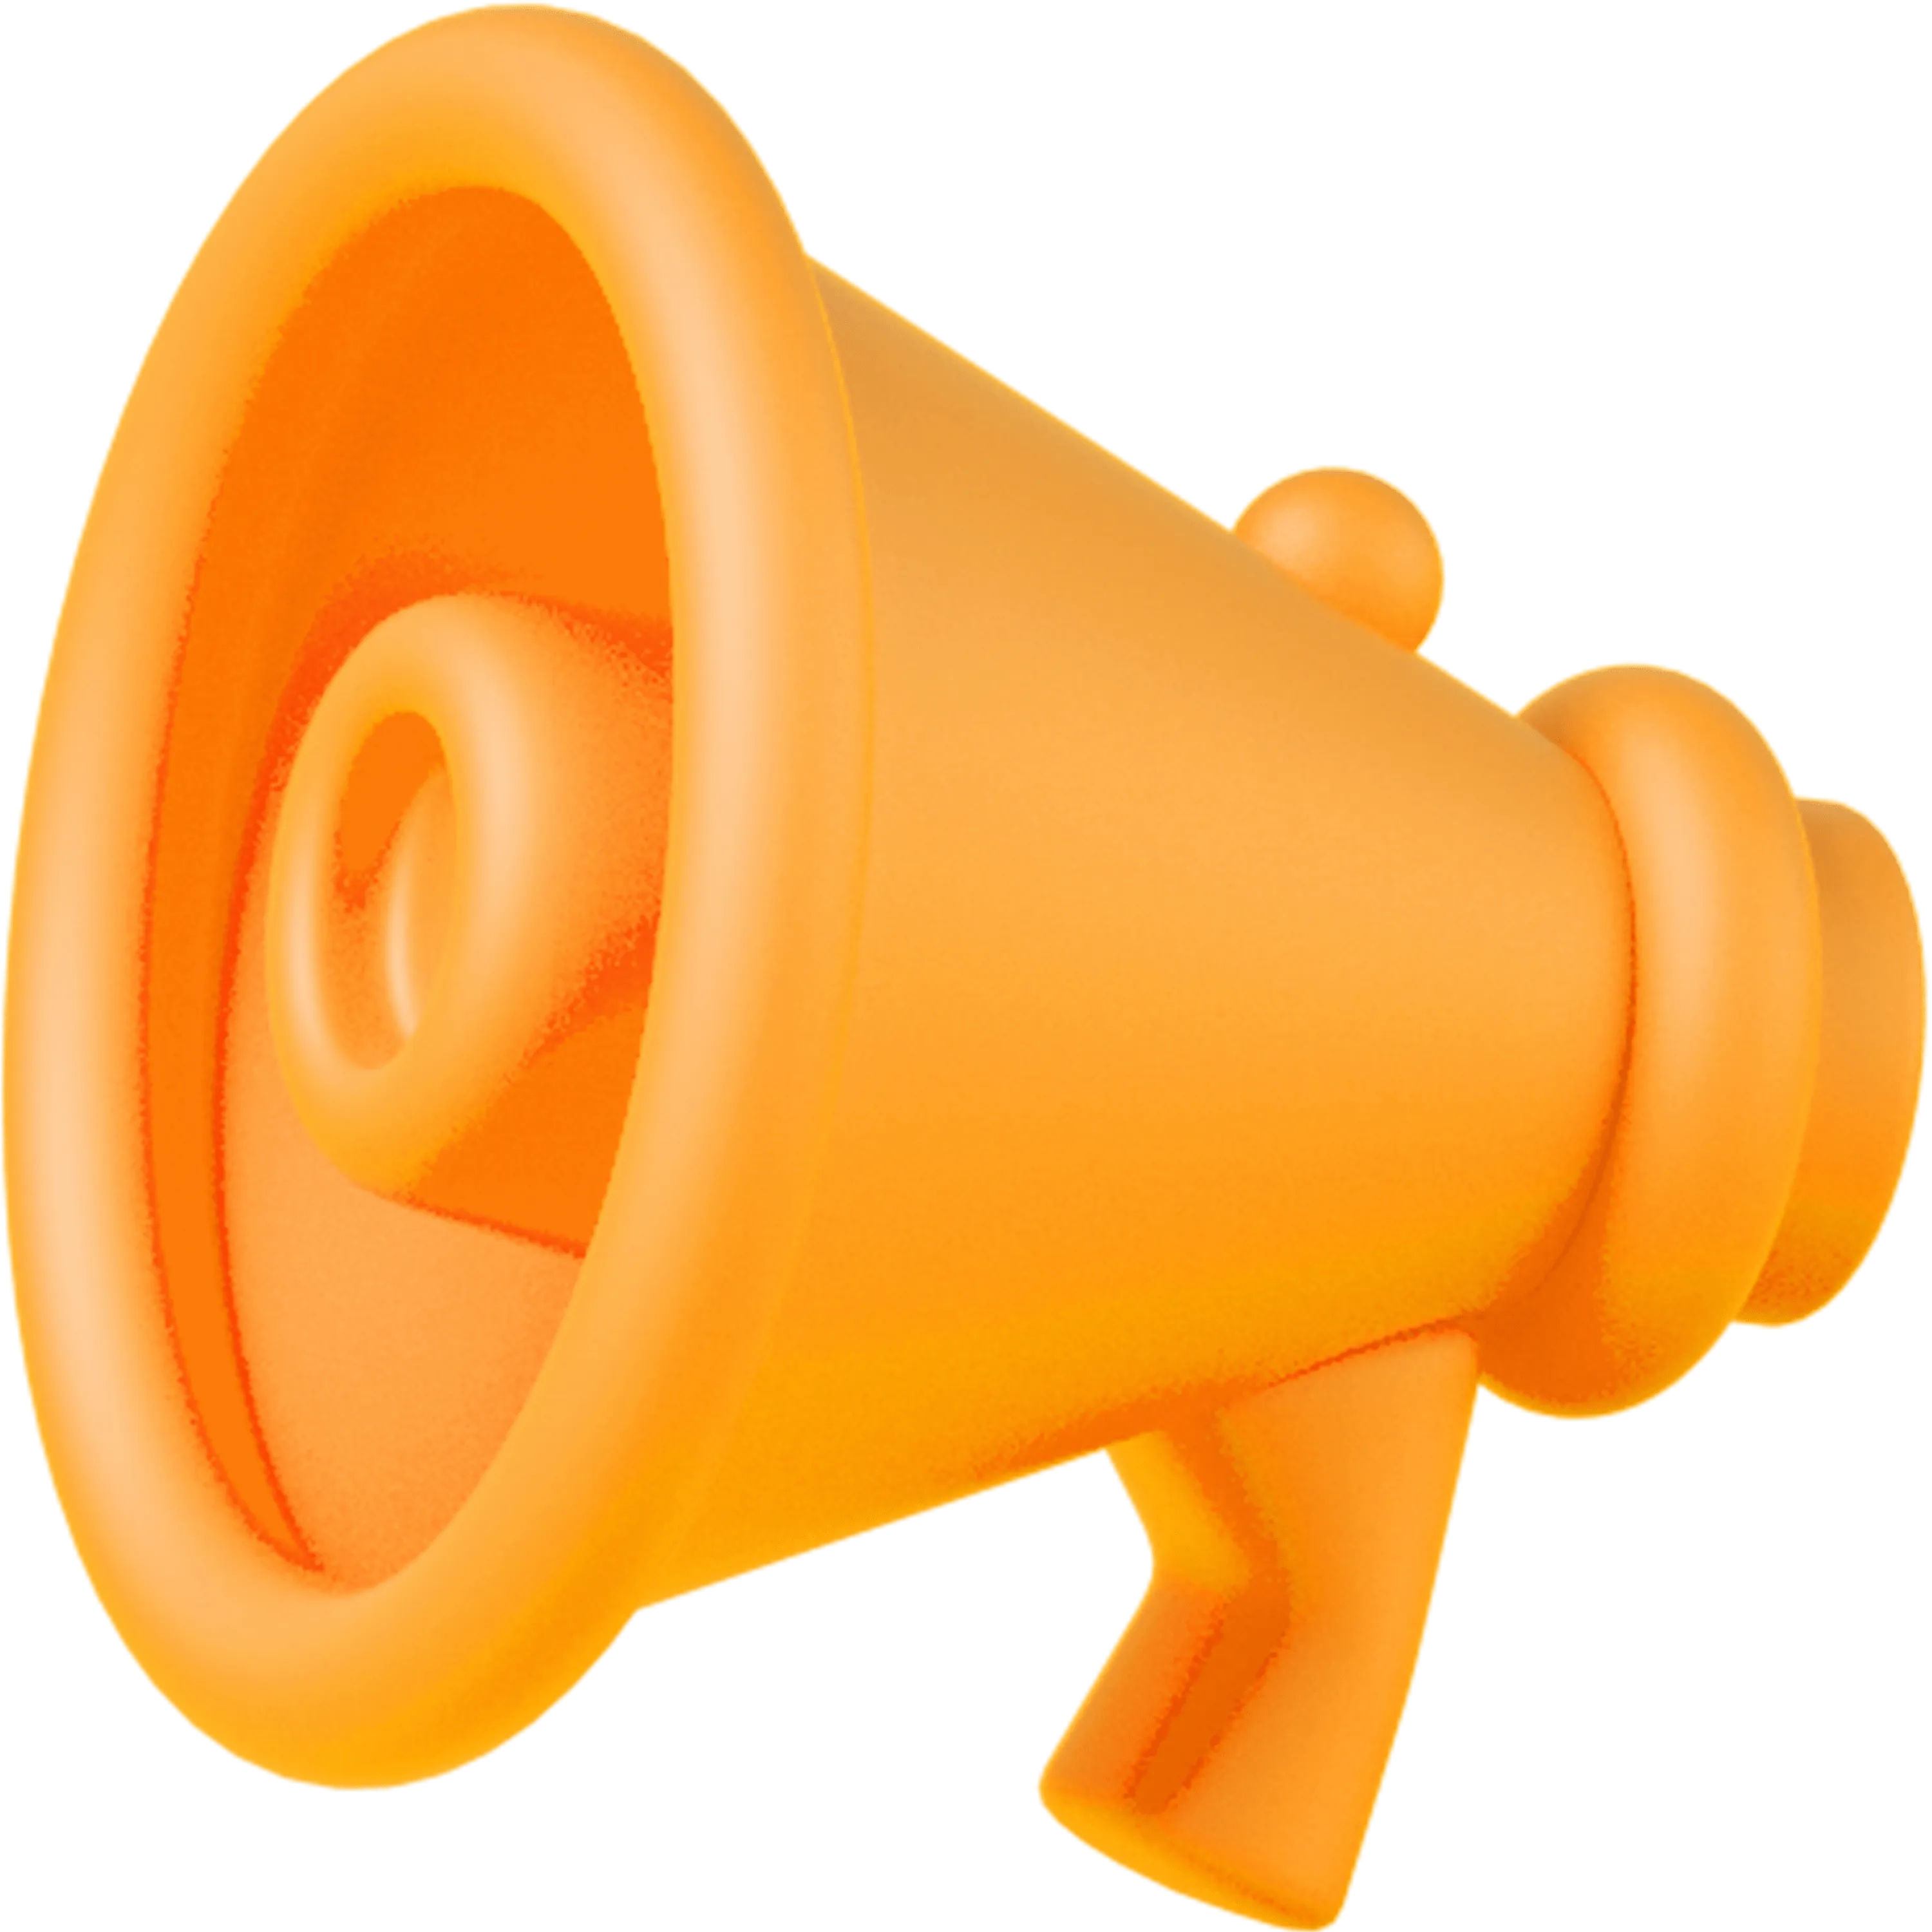 A 3D orange-red megaphone icon.